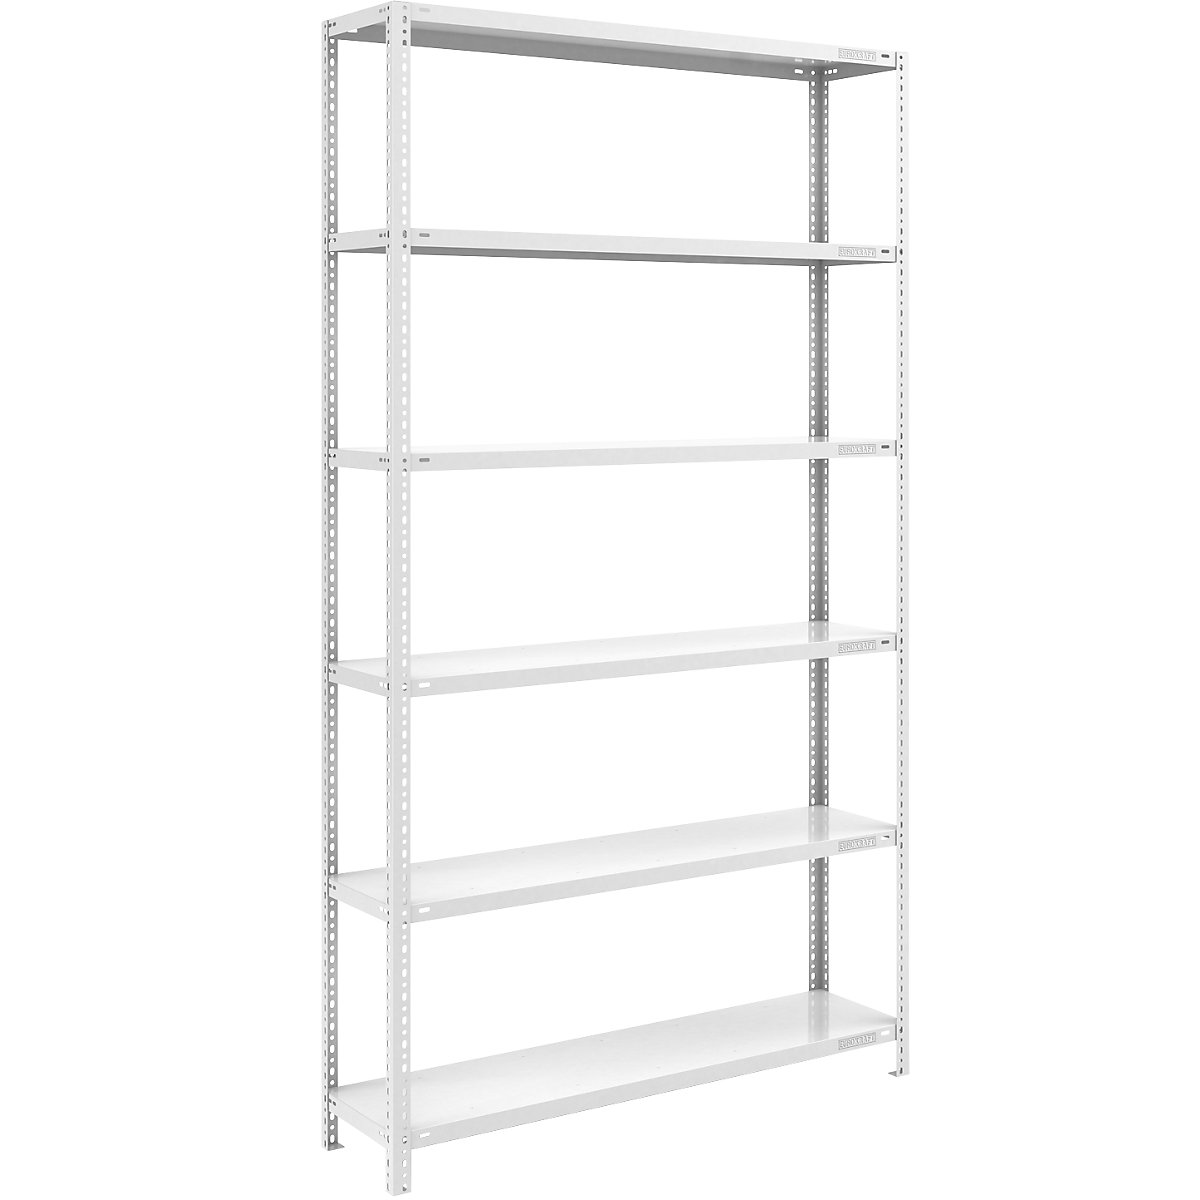 Bolt-together shelf unit, light duty, plastic coated – eurokraft pro, shelf unit height 2500 mm, shelf width 1300 mm, depth 400 mm, standard shelf unit-6